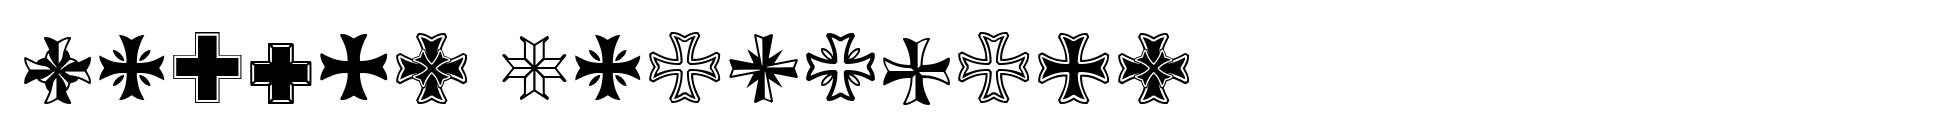 Crucis Ornaments